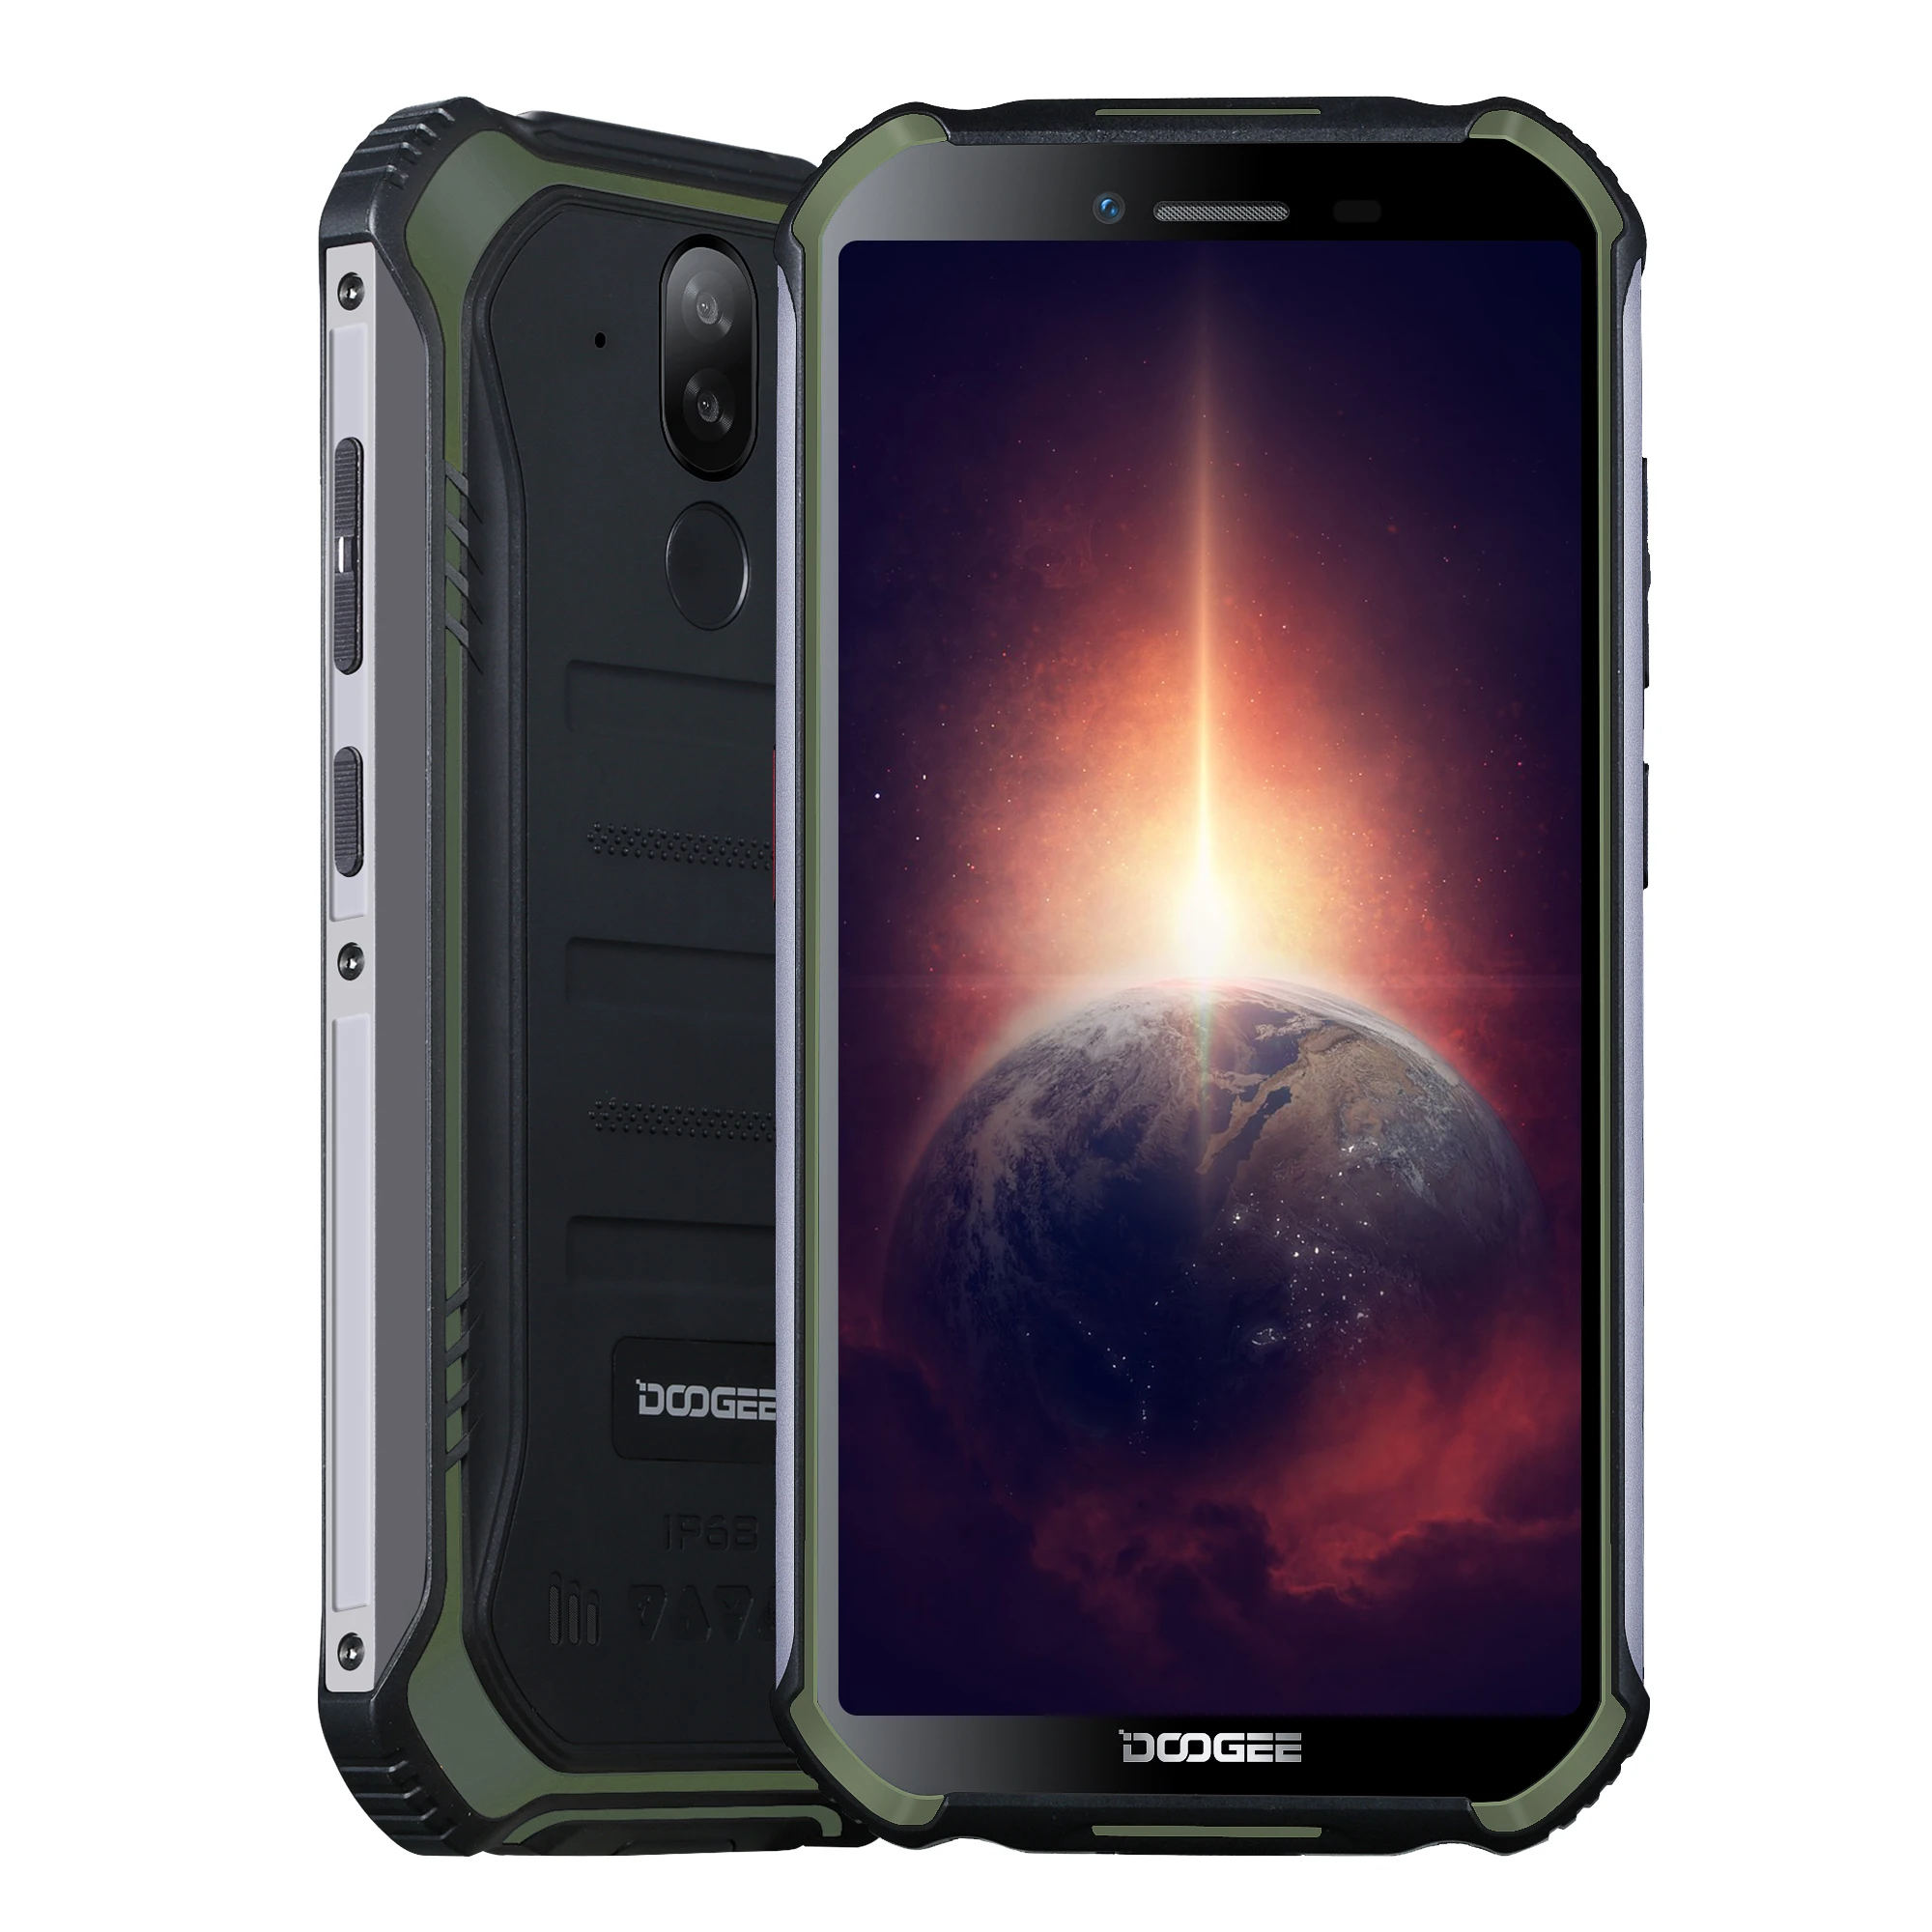 

Global Original S40Pro Explosion-proof 4GB+64GB 5.45 inch Waterproof Mobile Phone, Black / green/orange